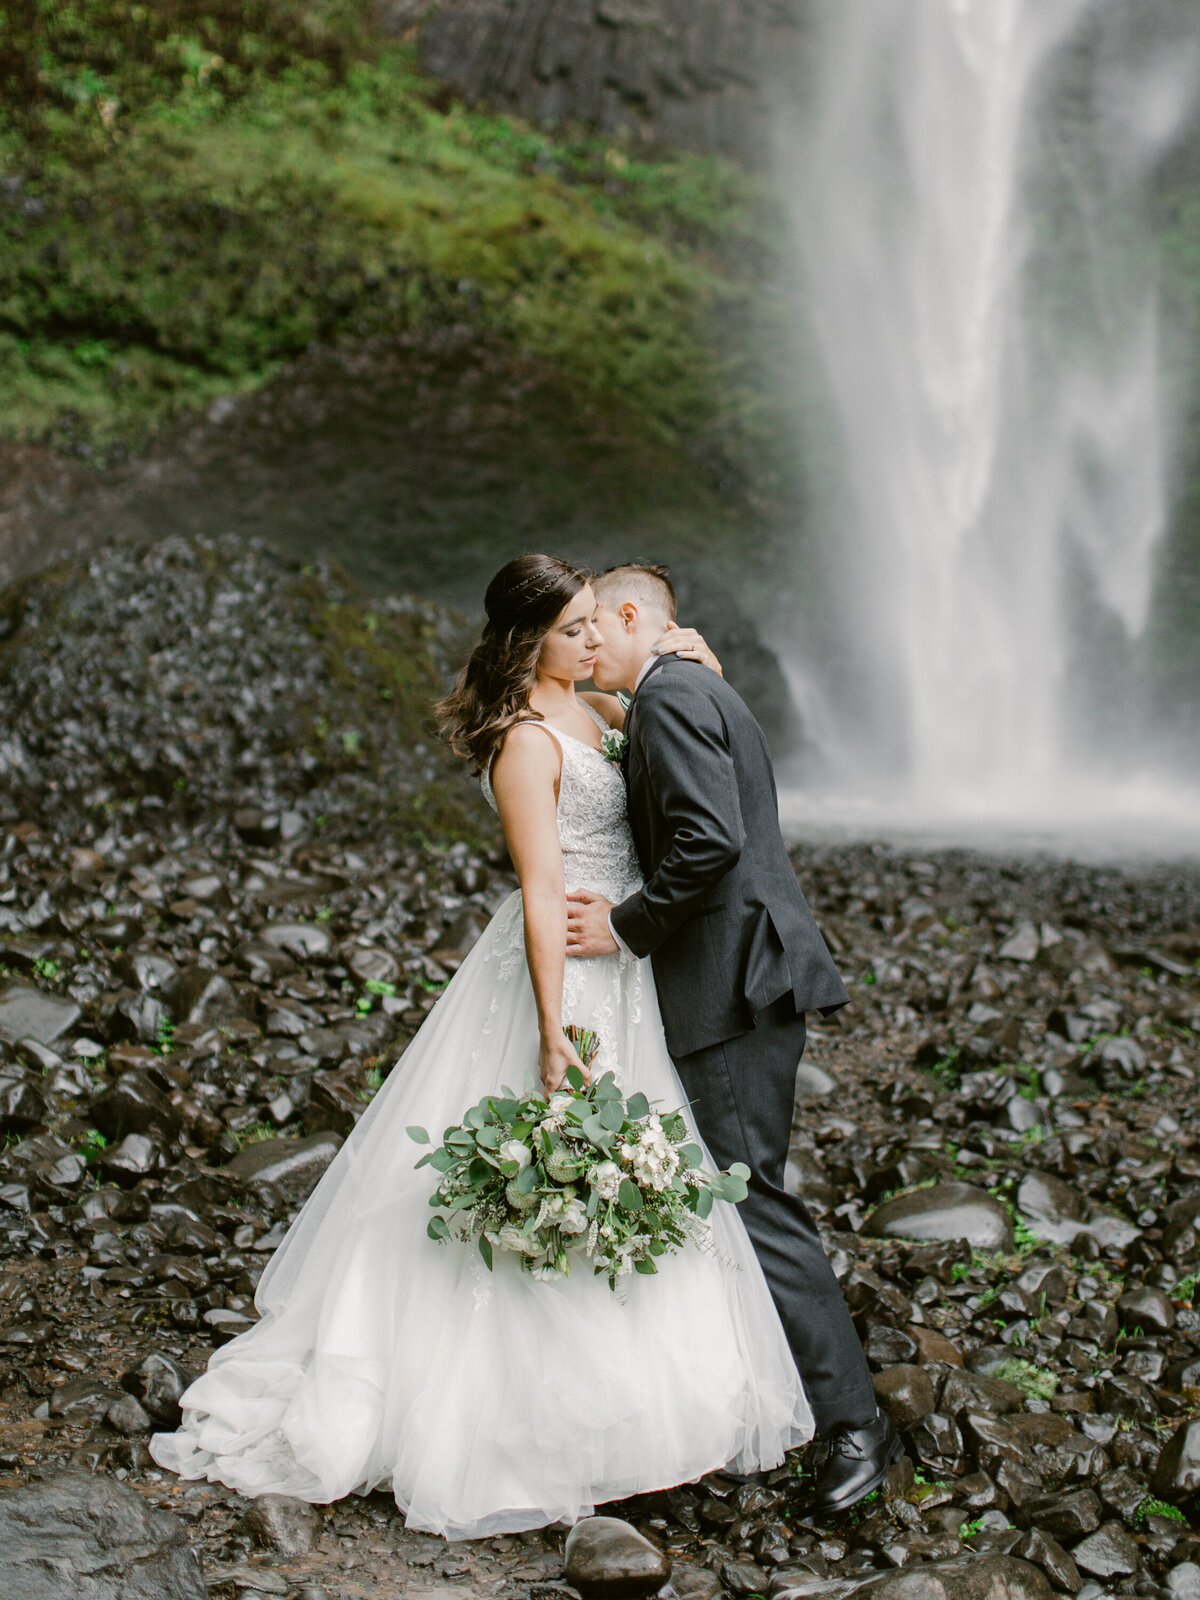 Wedding photographer in Portland Oregon